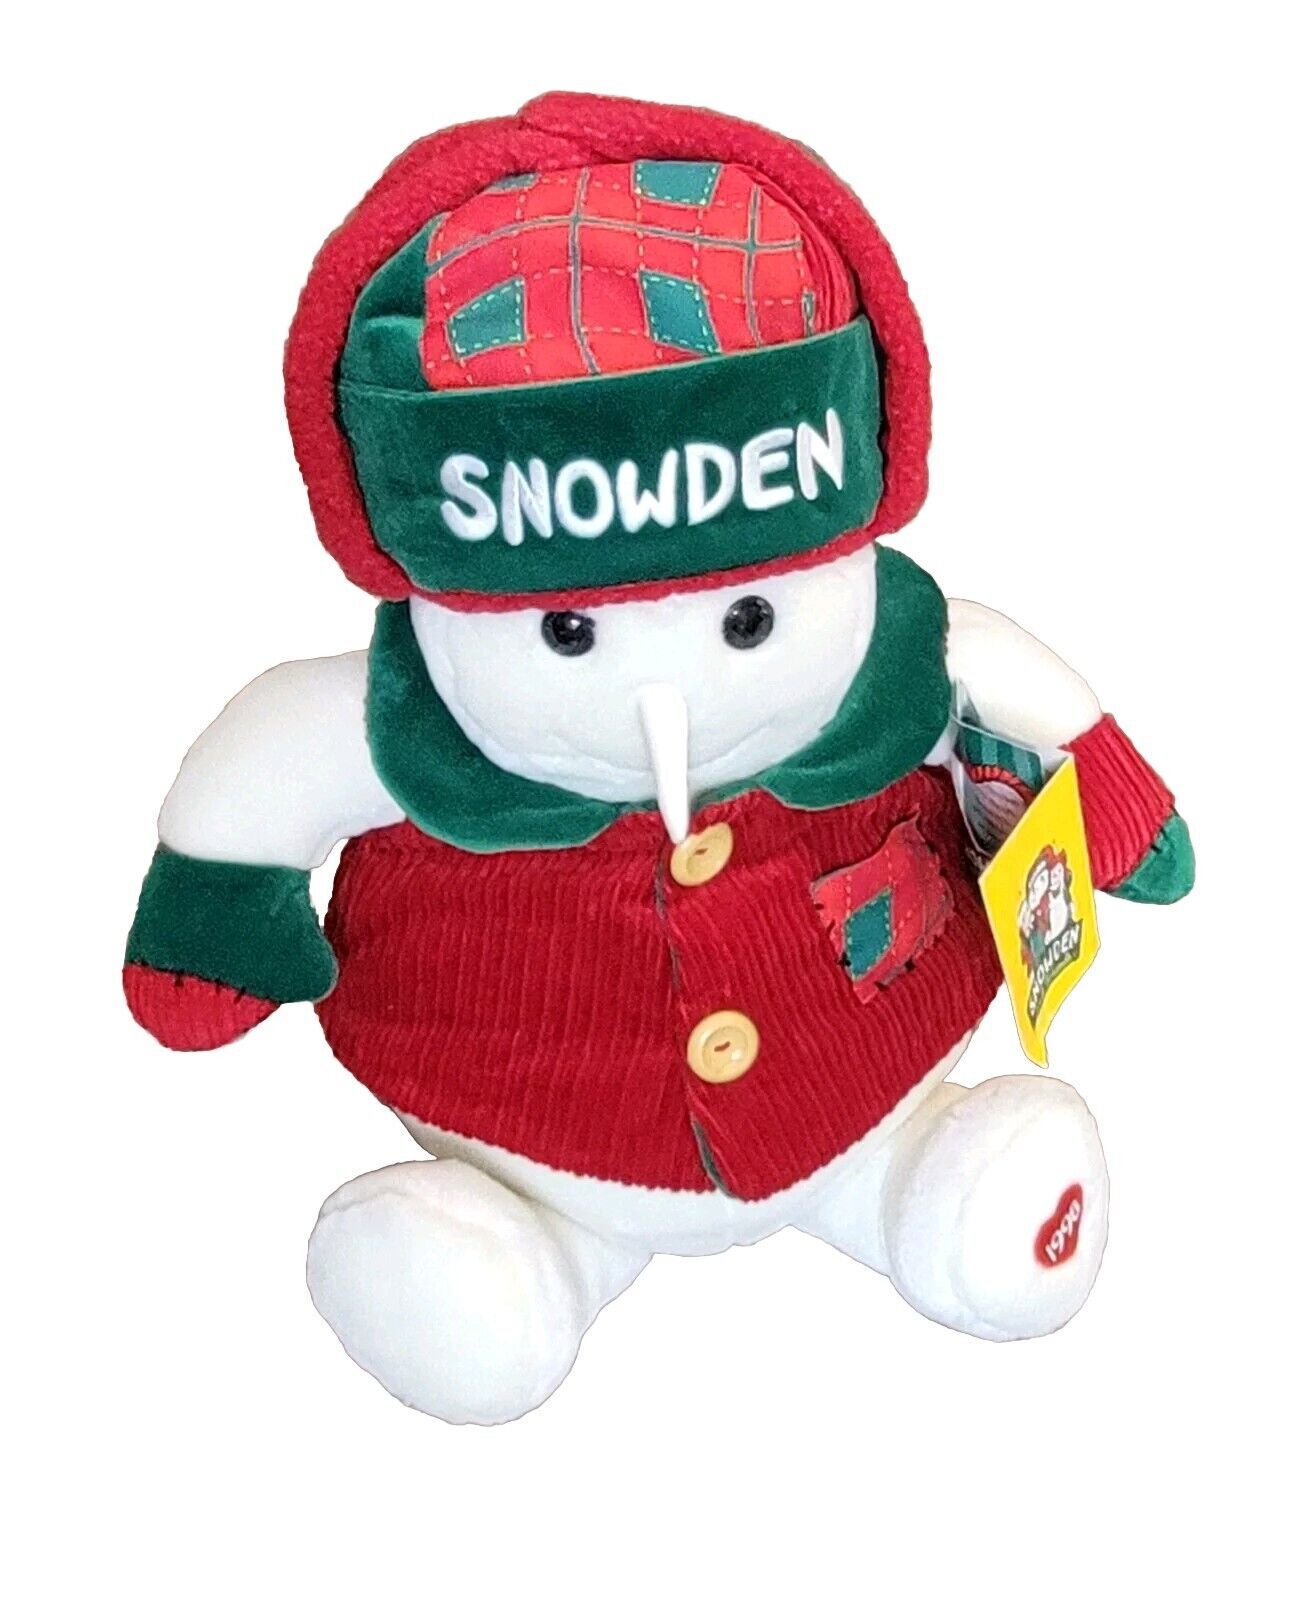 Vintage 1998 Commonwealth Snowden Christmas Snowman Plush Styffed Animal 24